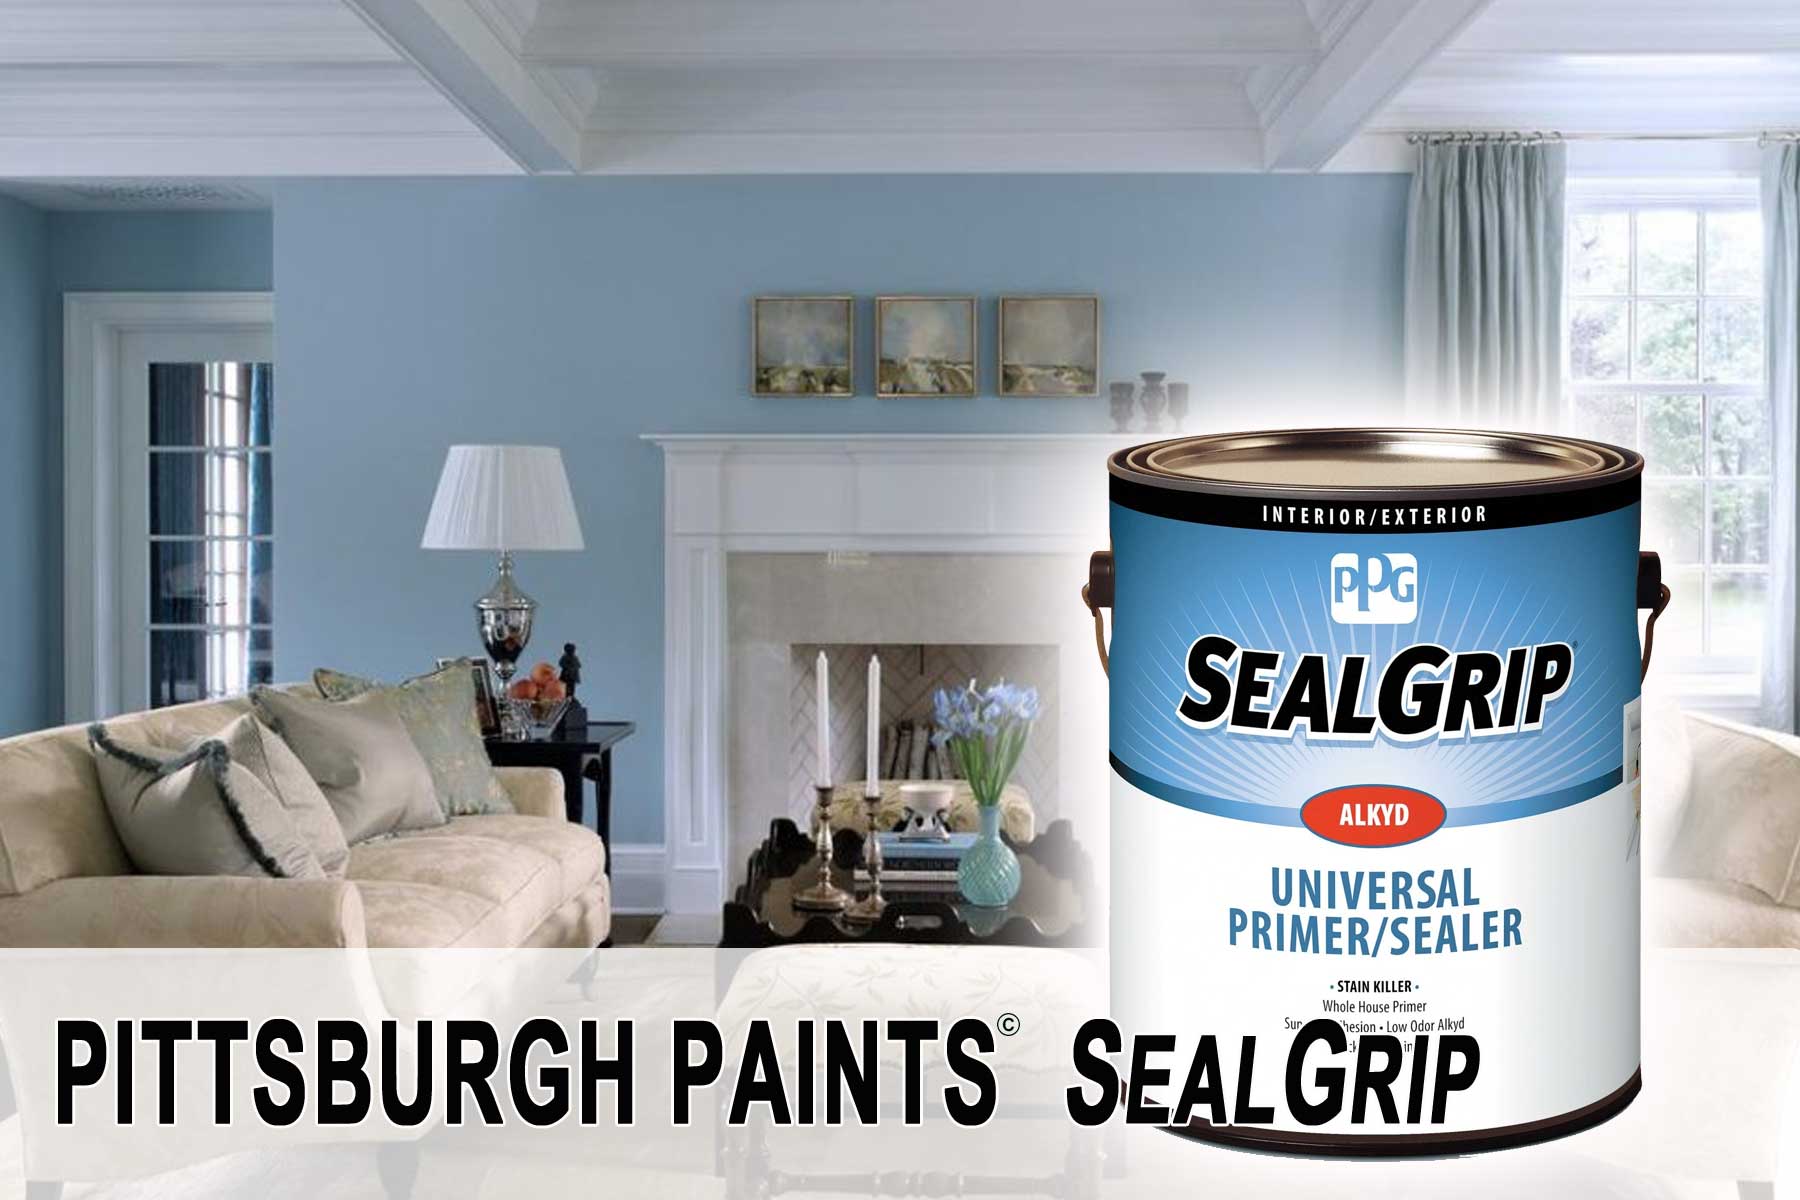 PPG SEAL GRIP Interior/Exterior Acrylic Universal Primer/Sealer